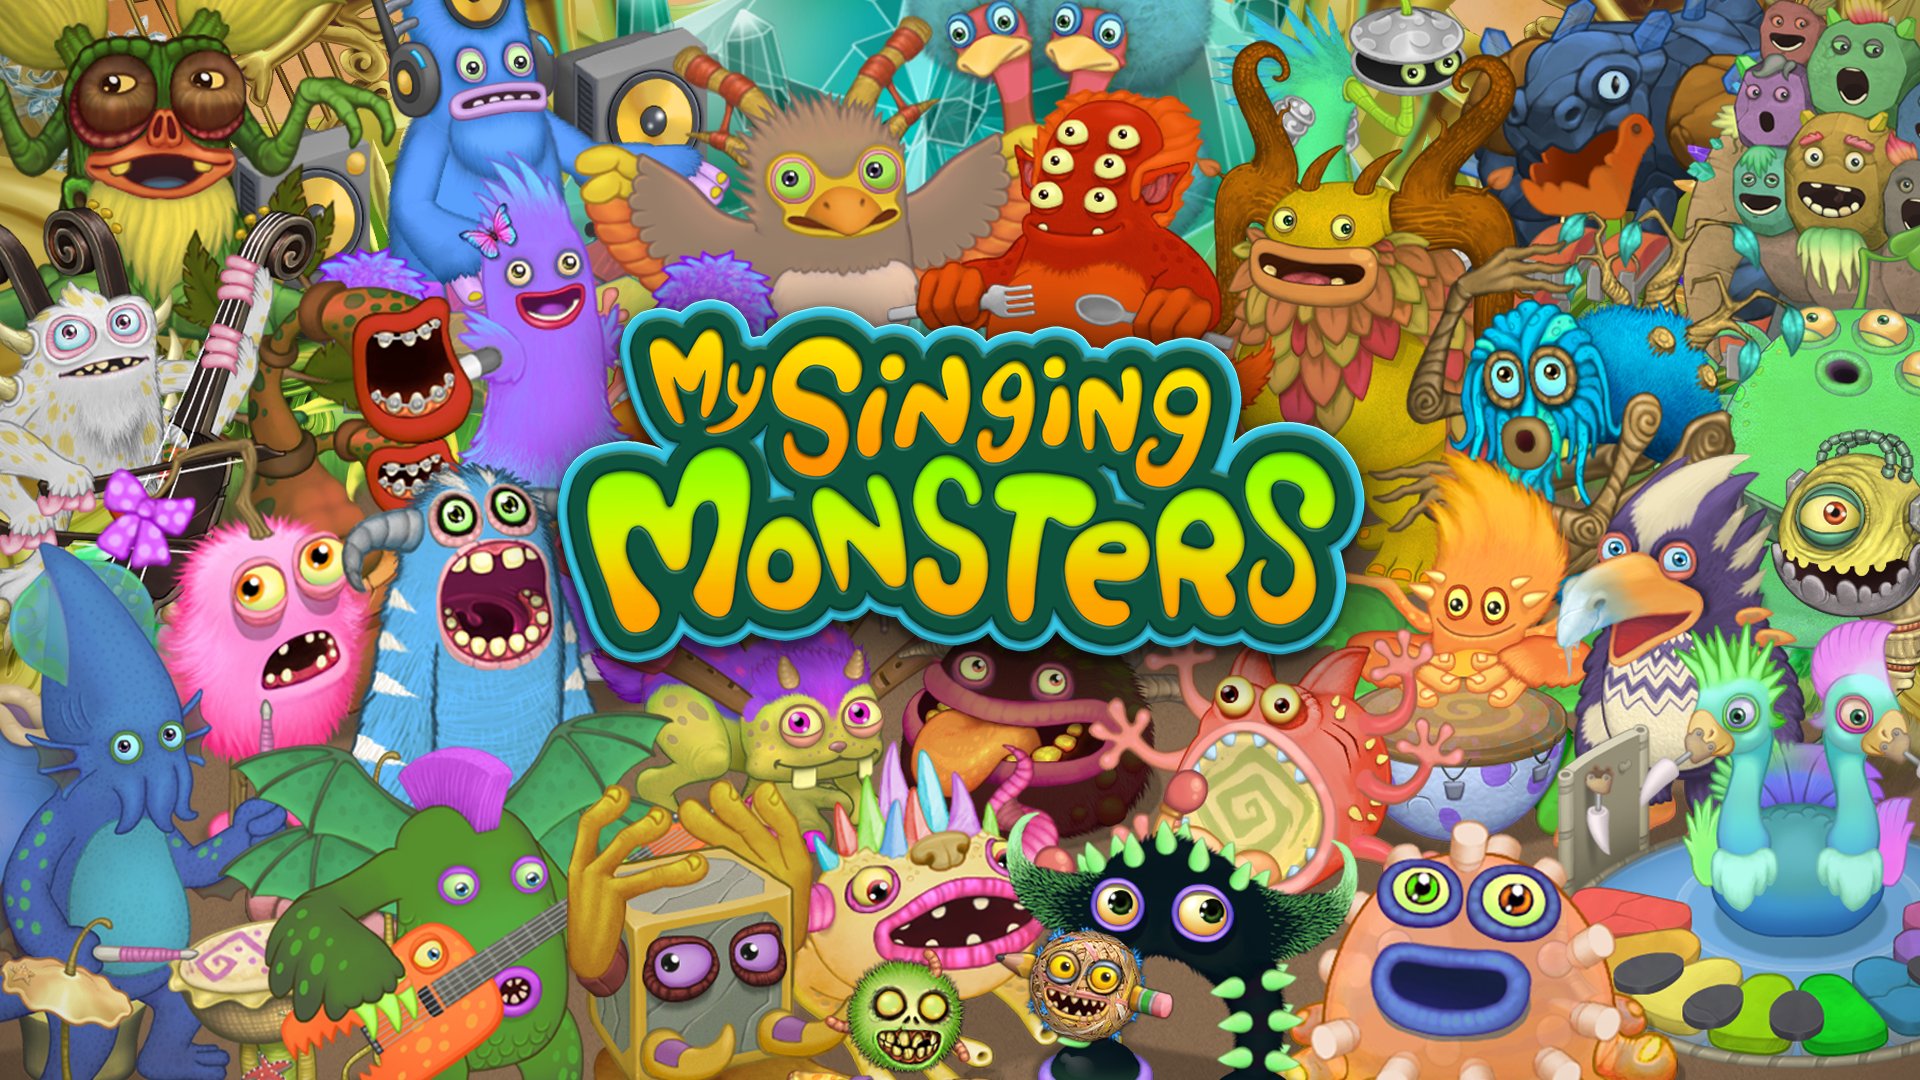 My Singing Monsters Wallpapers